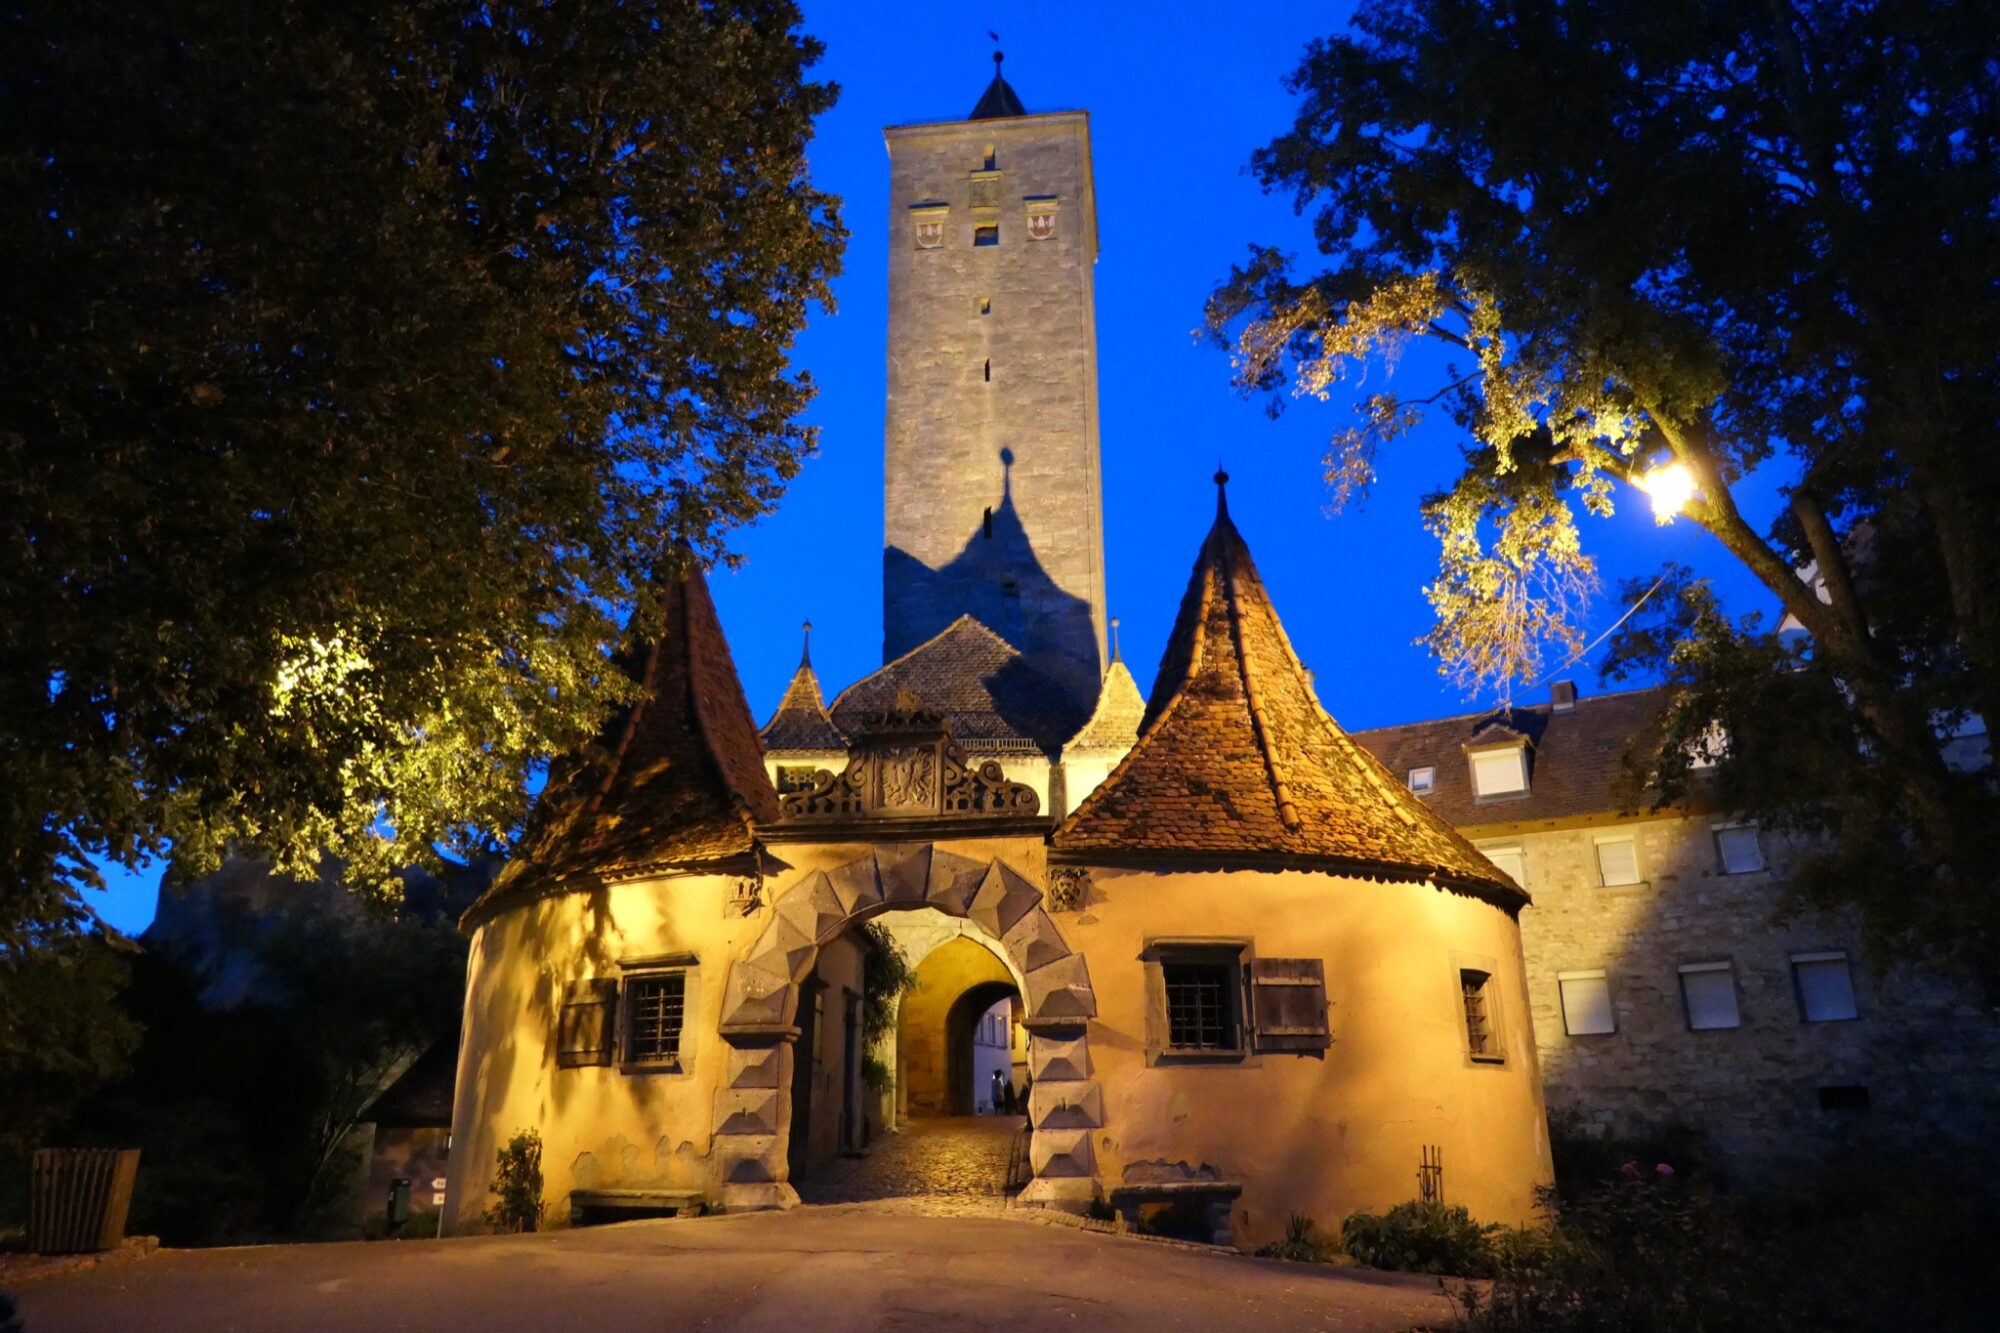 One of Rothenburg's city gates at night.